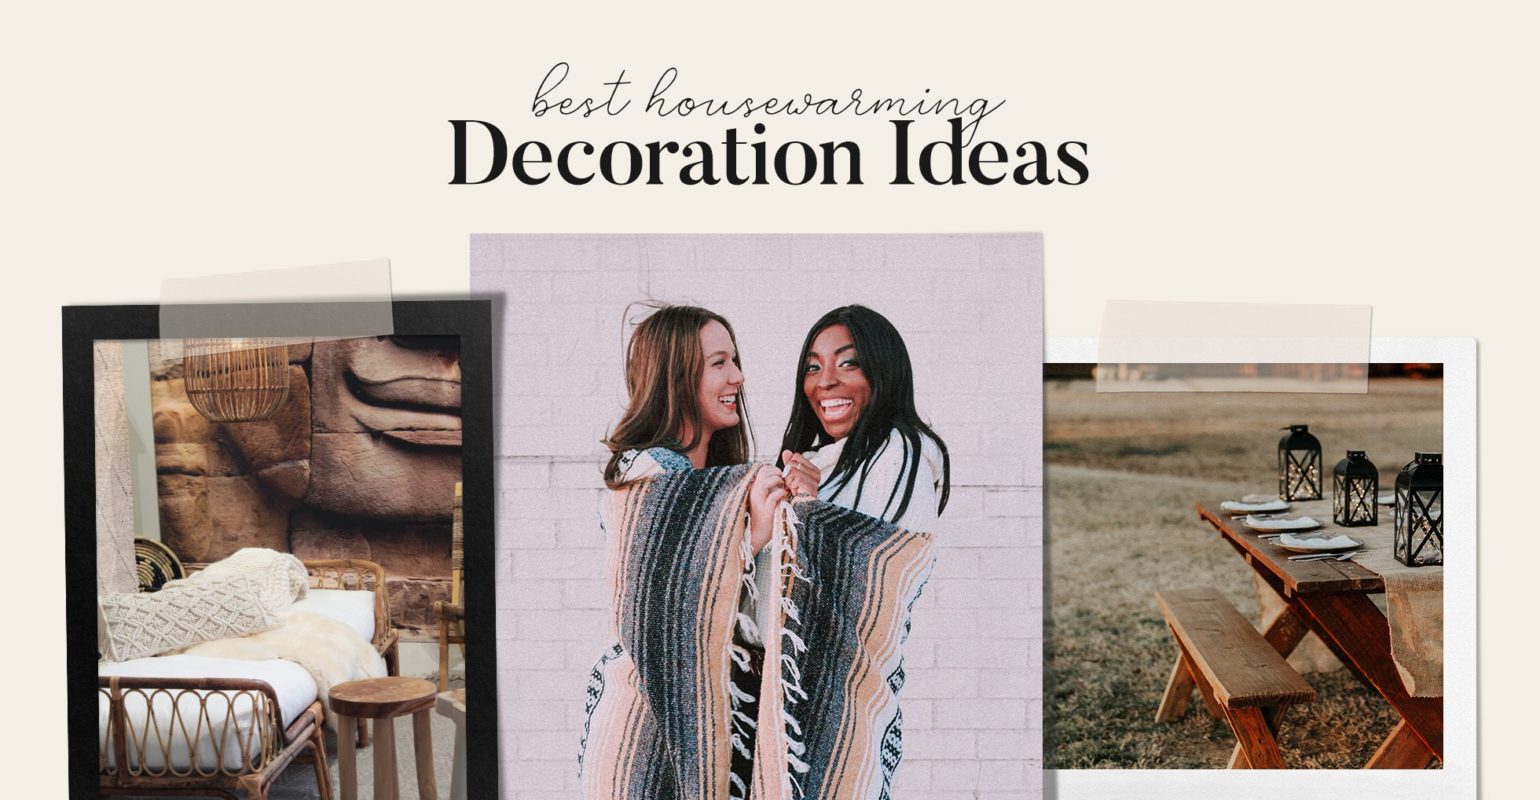 Best Housewarming Decoration Ideas